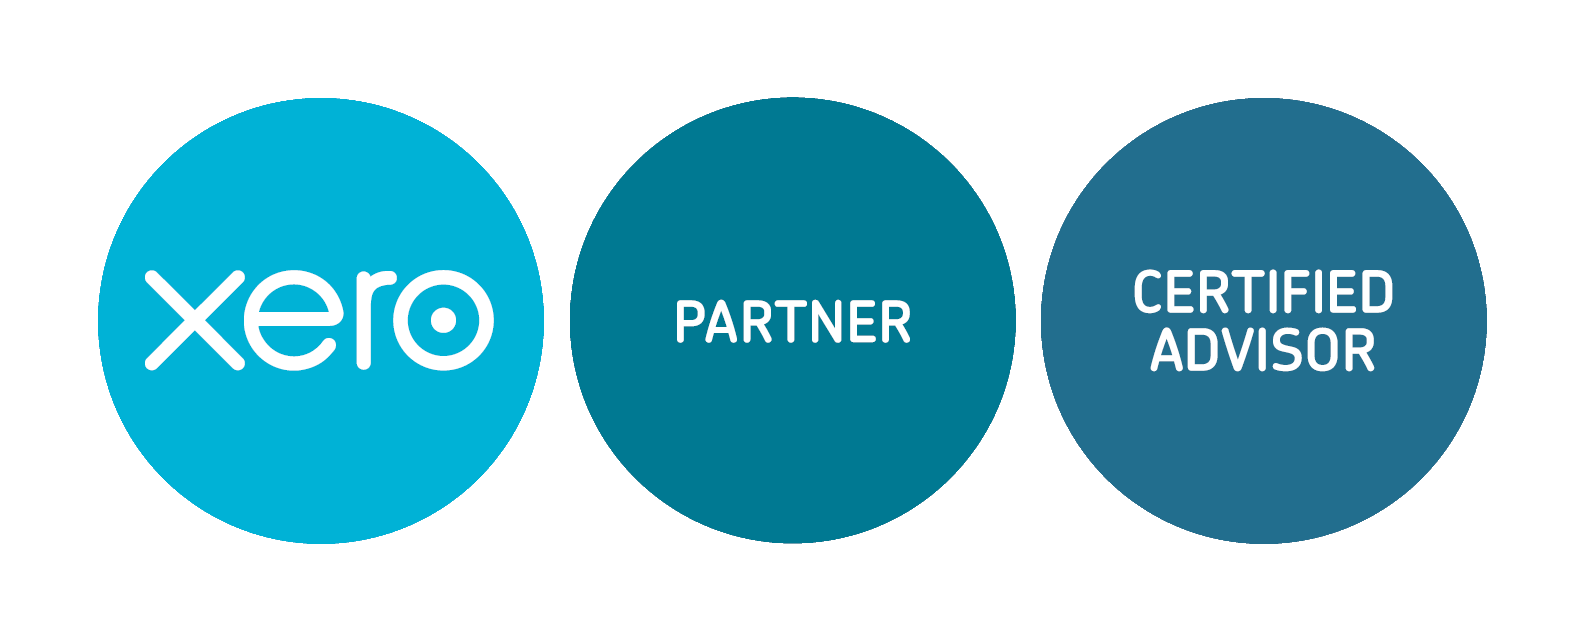 Xero partner badge